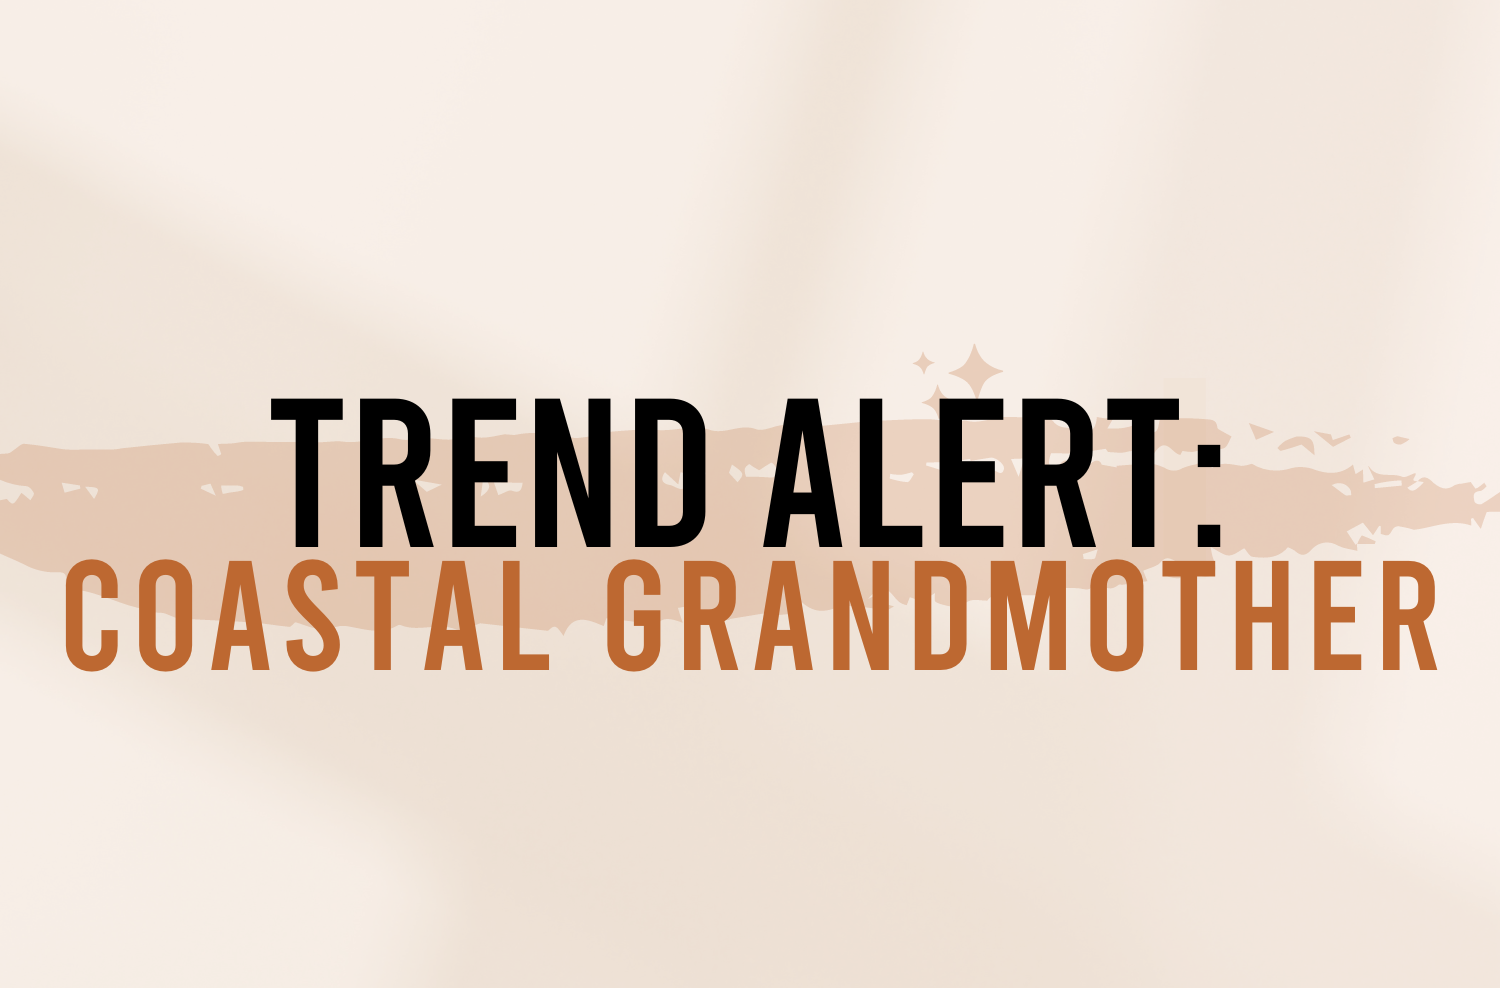 Trend Alert: Get Coastal Grandmother Swag